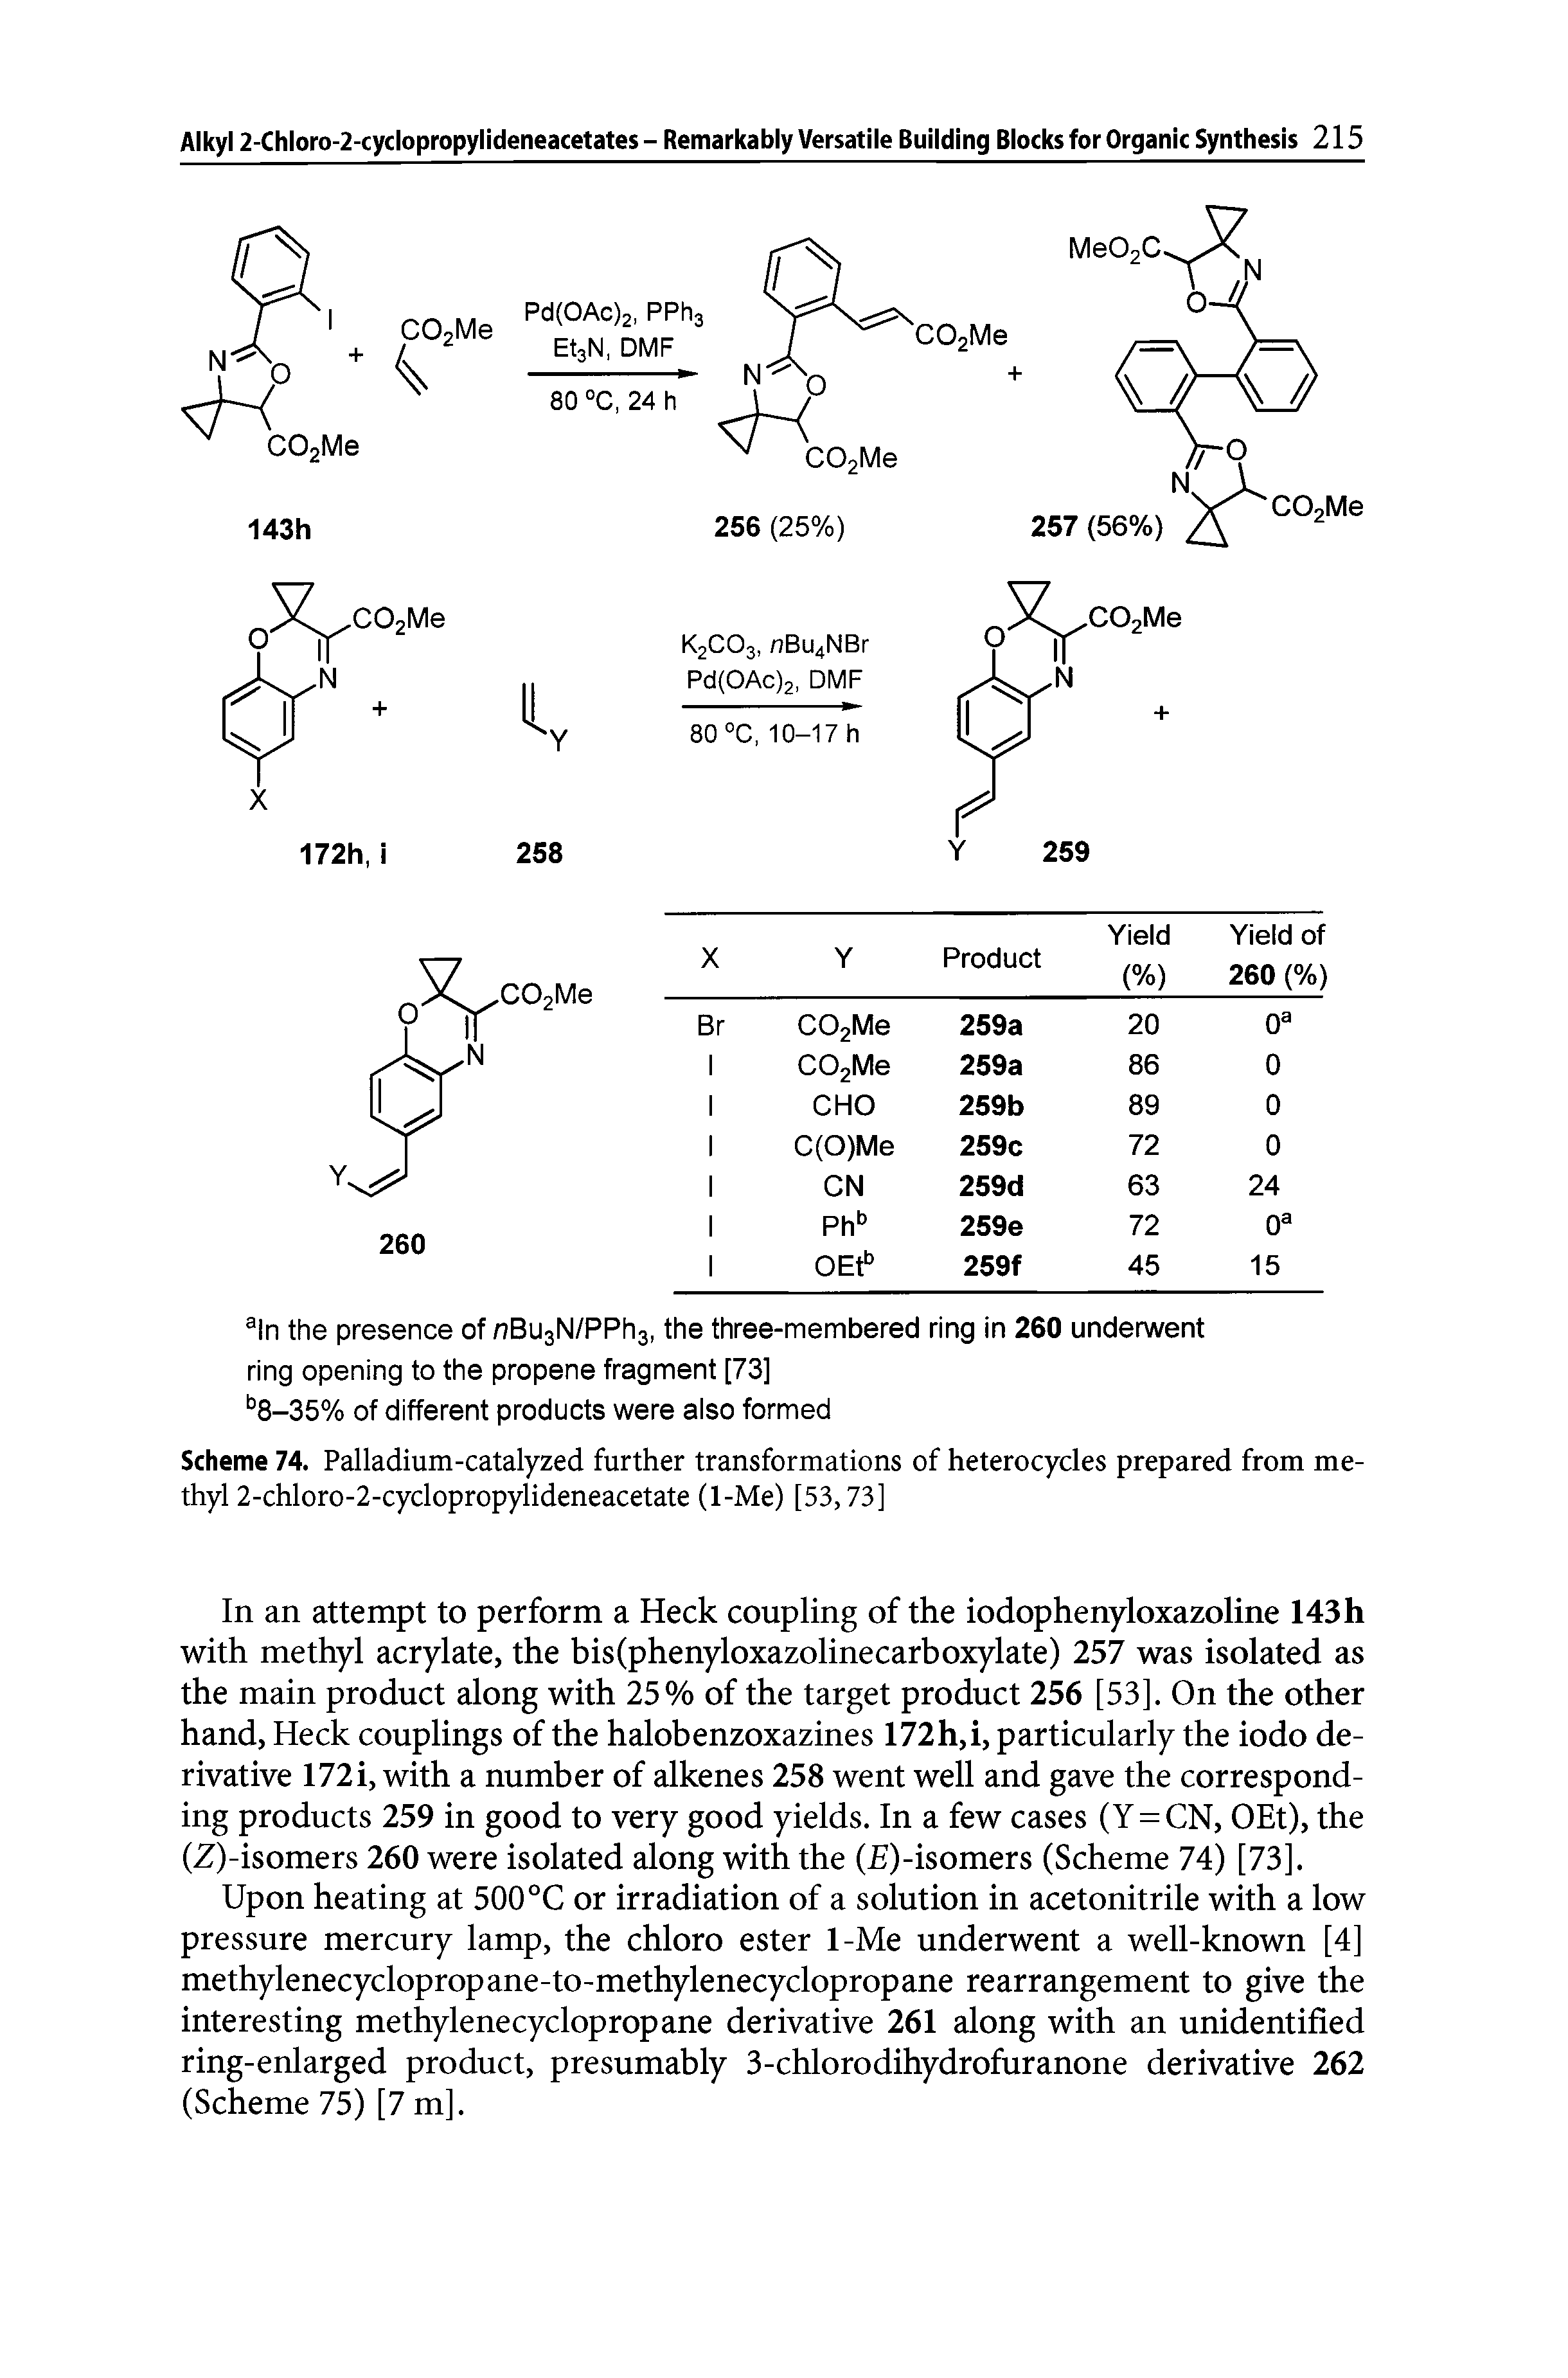 Scheme 74. Palladium-catalyzed further transformations of heterocycles prepared from methyl 2-chloro-2-cyclopropylideneacetate (1-Me) [53,73]...